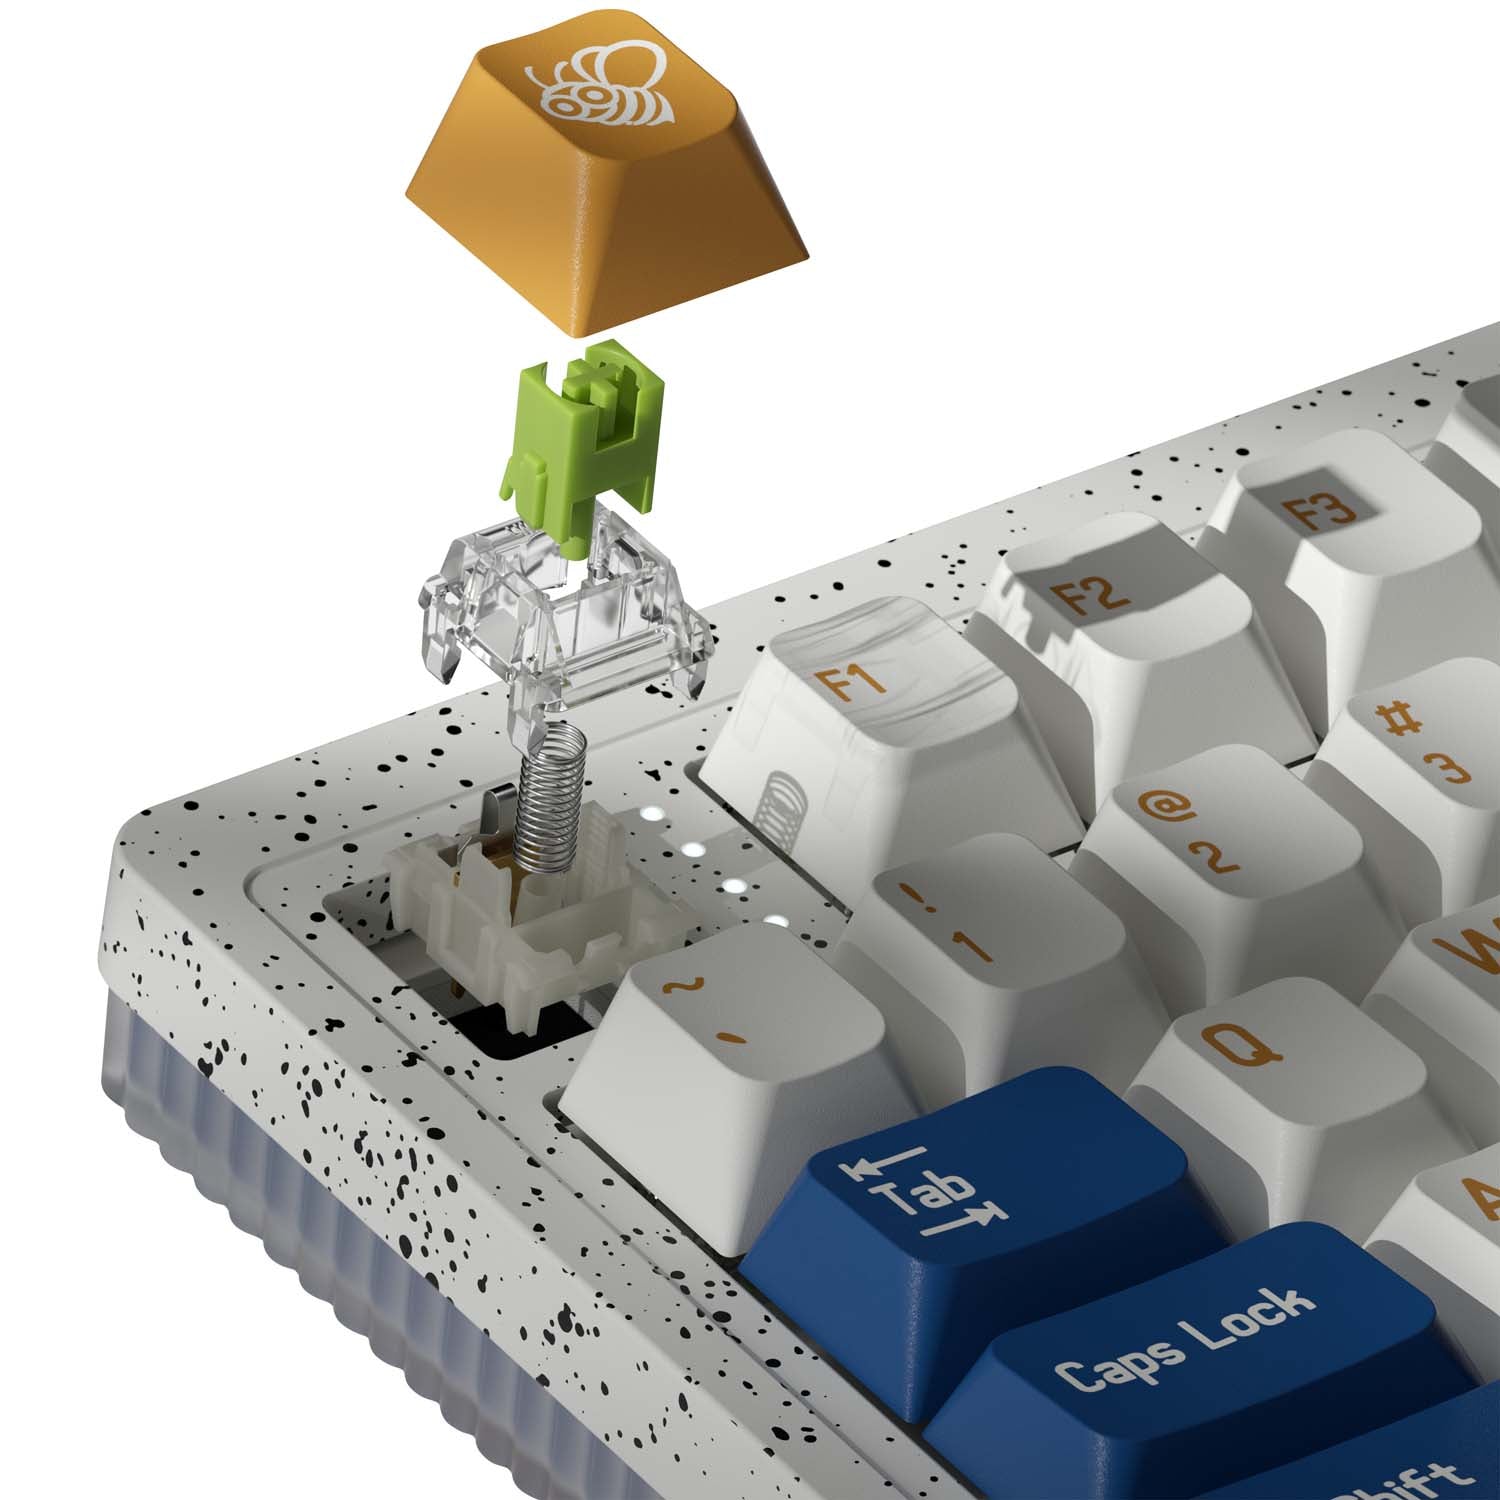 MelGeek Modern97 Work&Game Compact Mechanical Keyboard